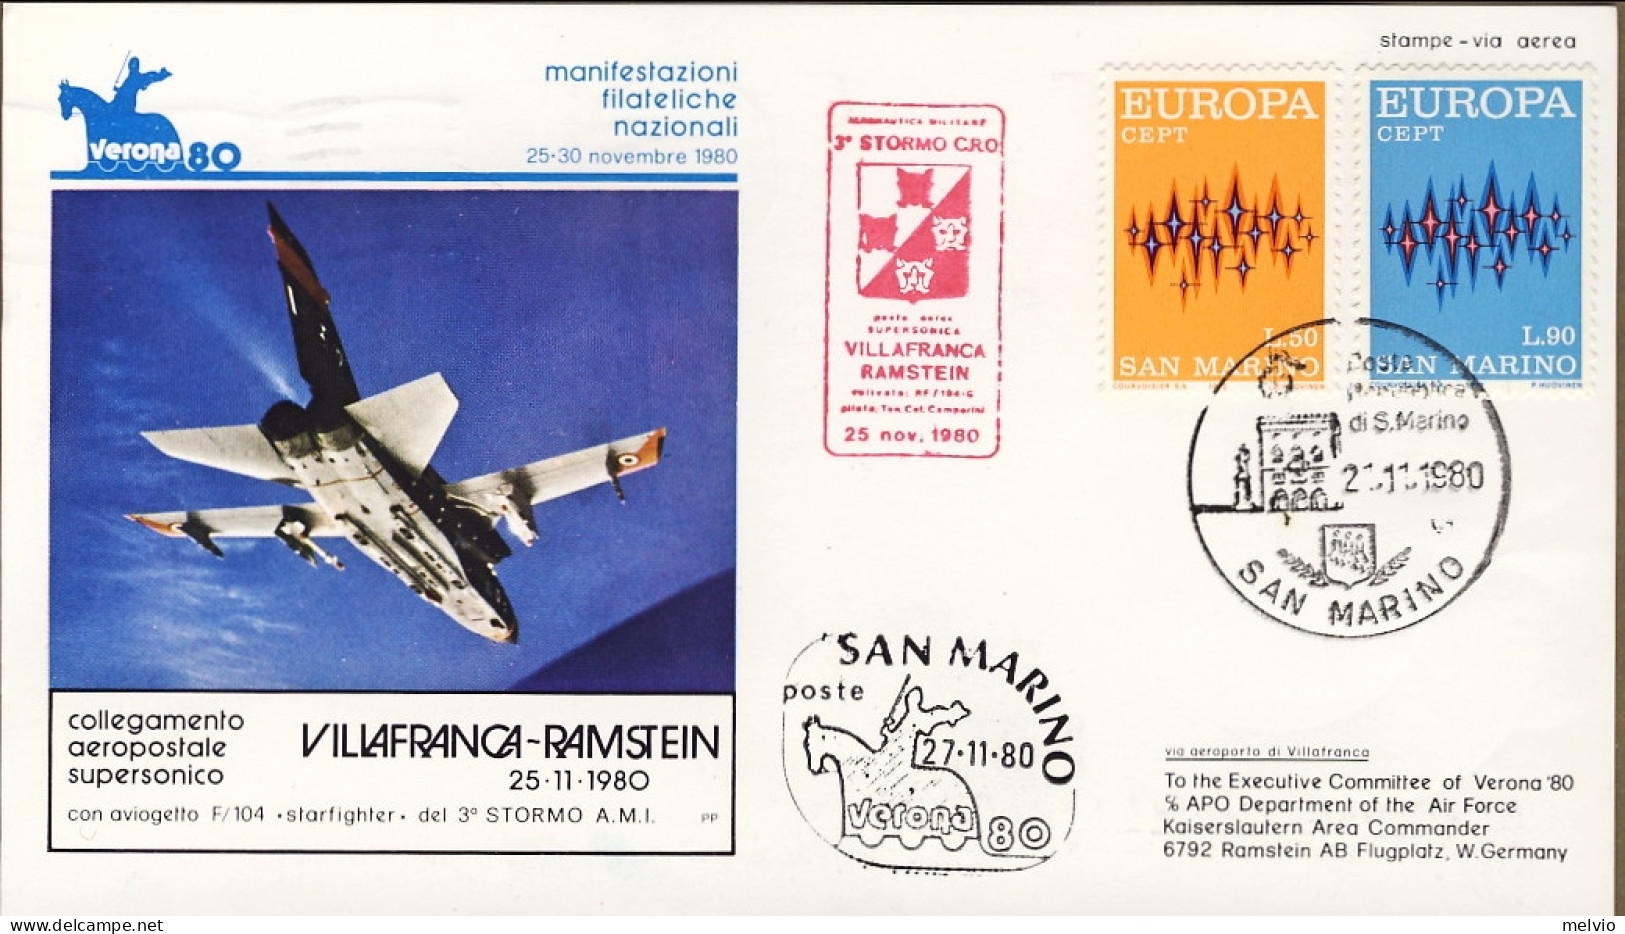 San Marino-1980 Cartolina Illustrata Manifestazioni Filateliche Nazionali Verona - Posta Aerea